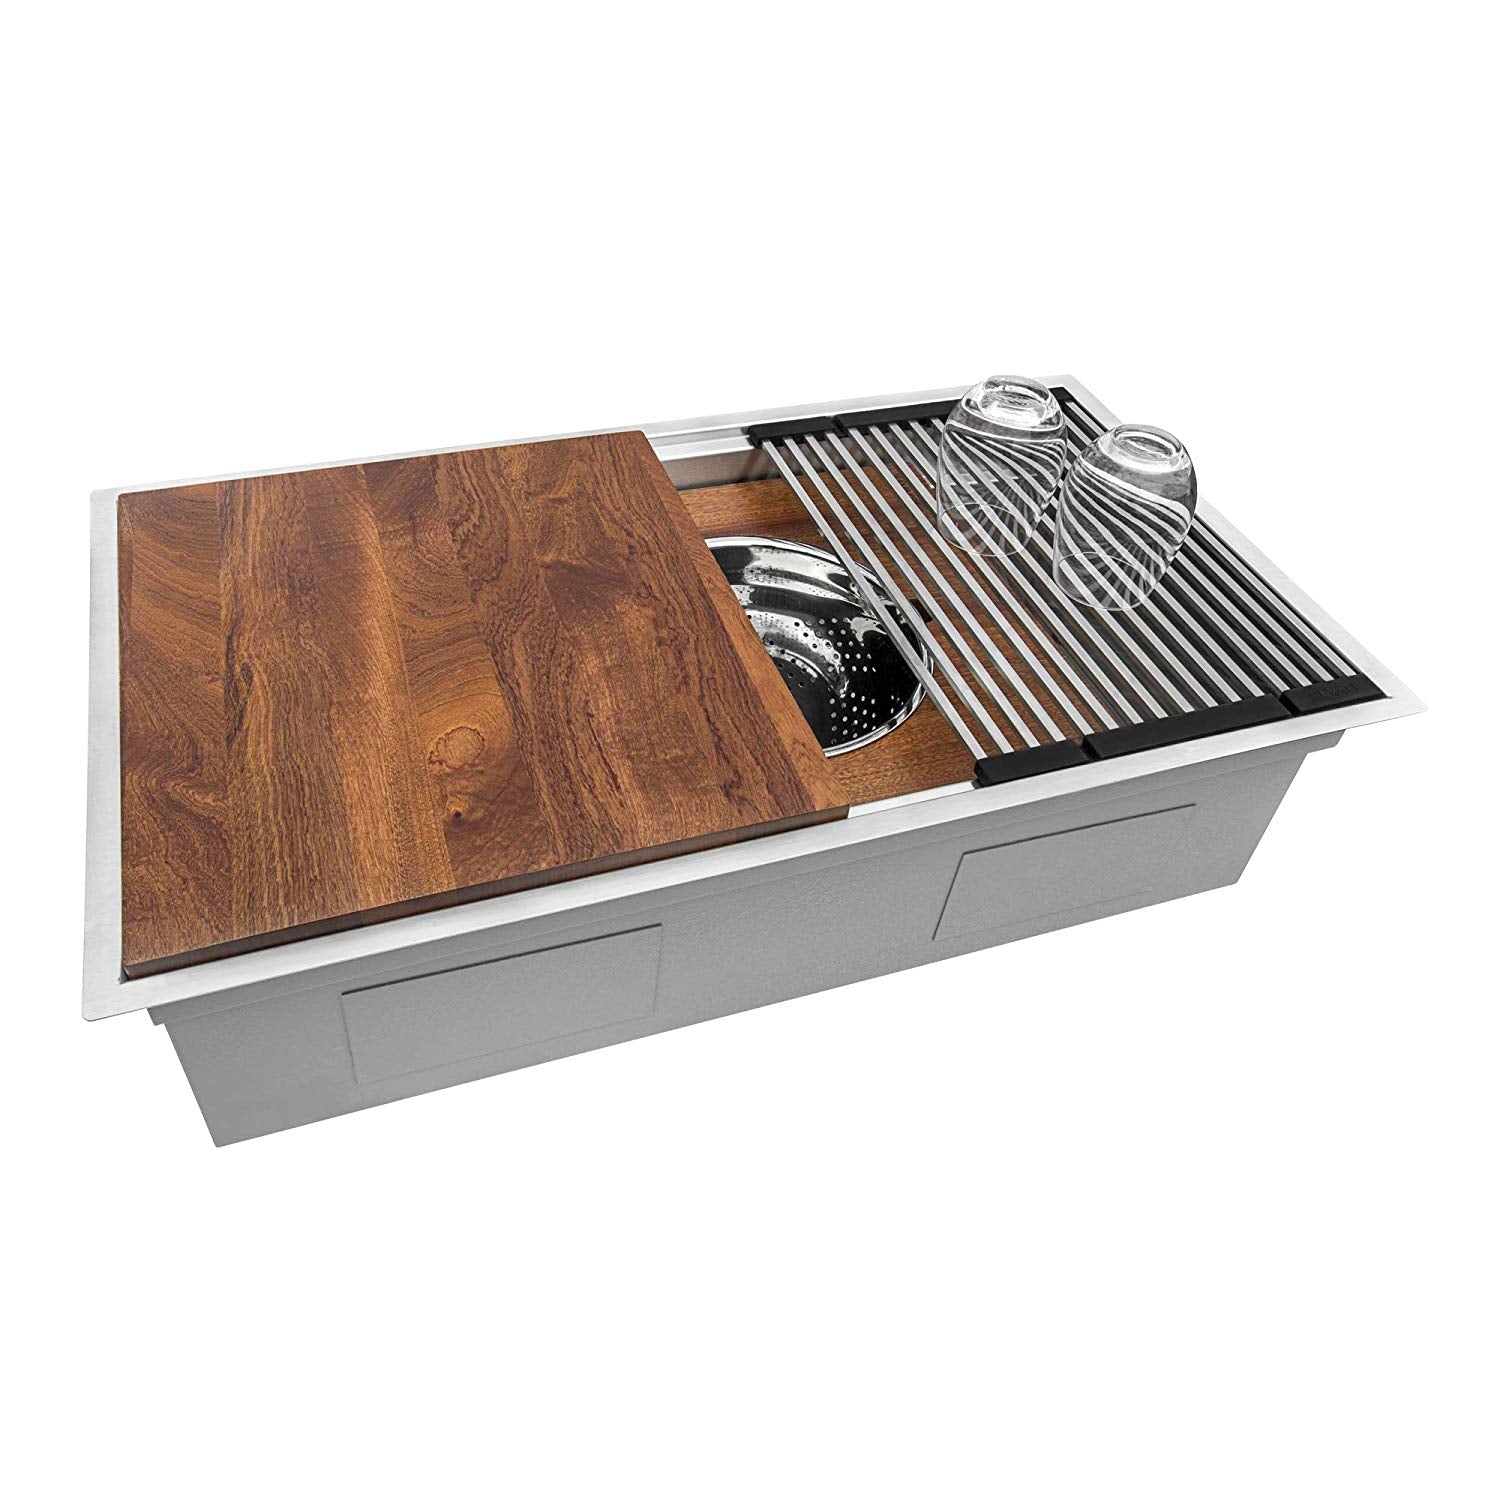 Ruvati 33-inch Workstation Dual Tier Double Bowl Low Divide Undermount 16 Gauge Stainless Steel Kitchen Sink – RVH8255